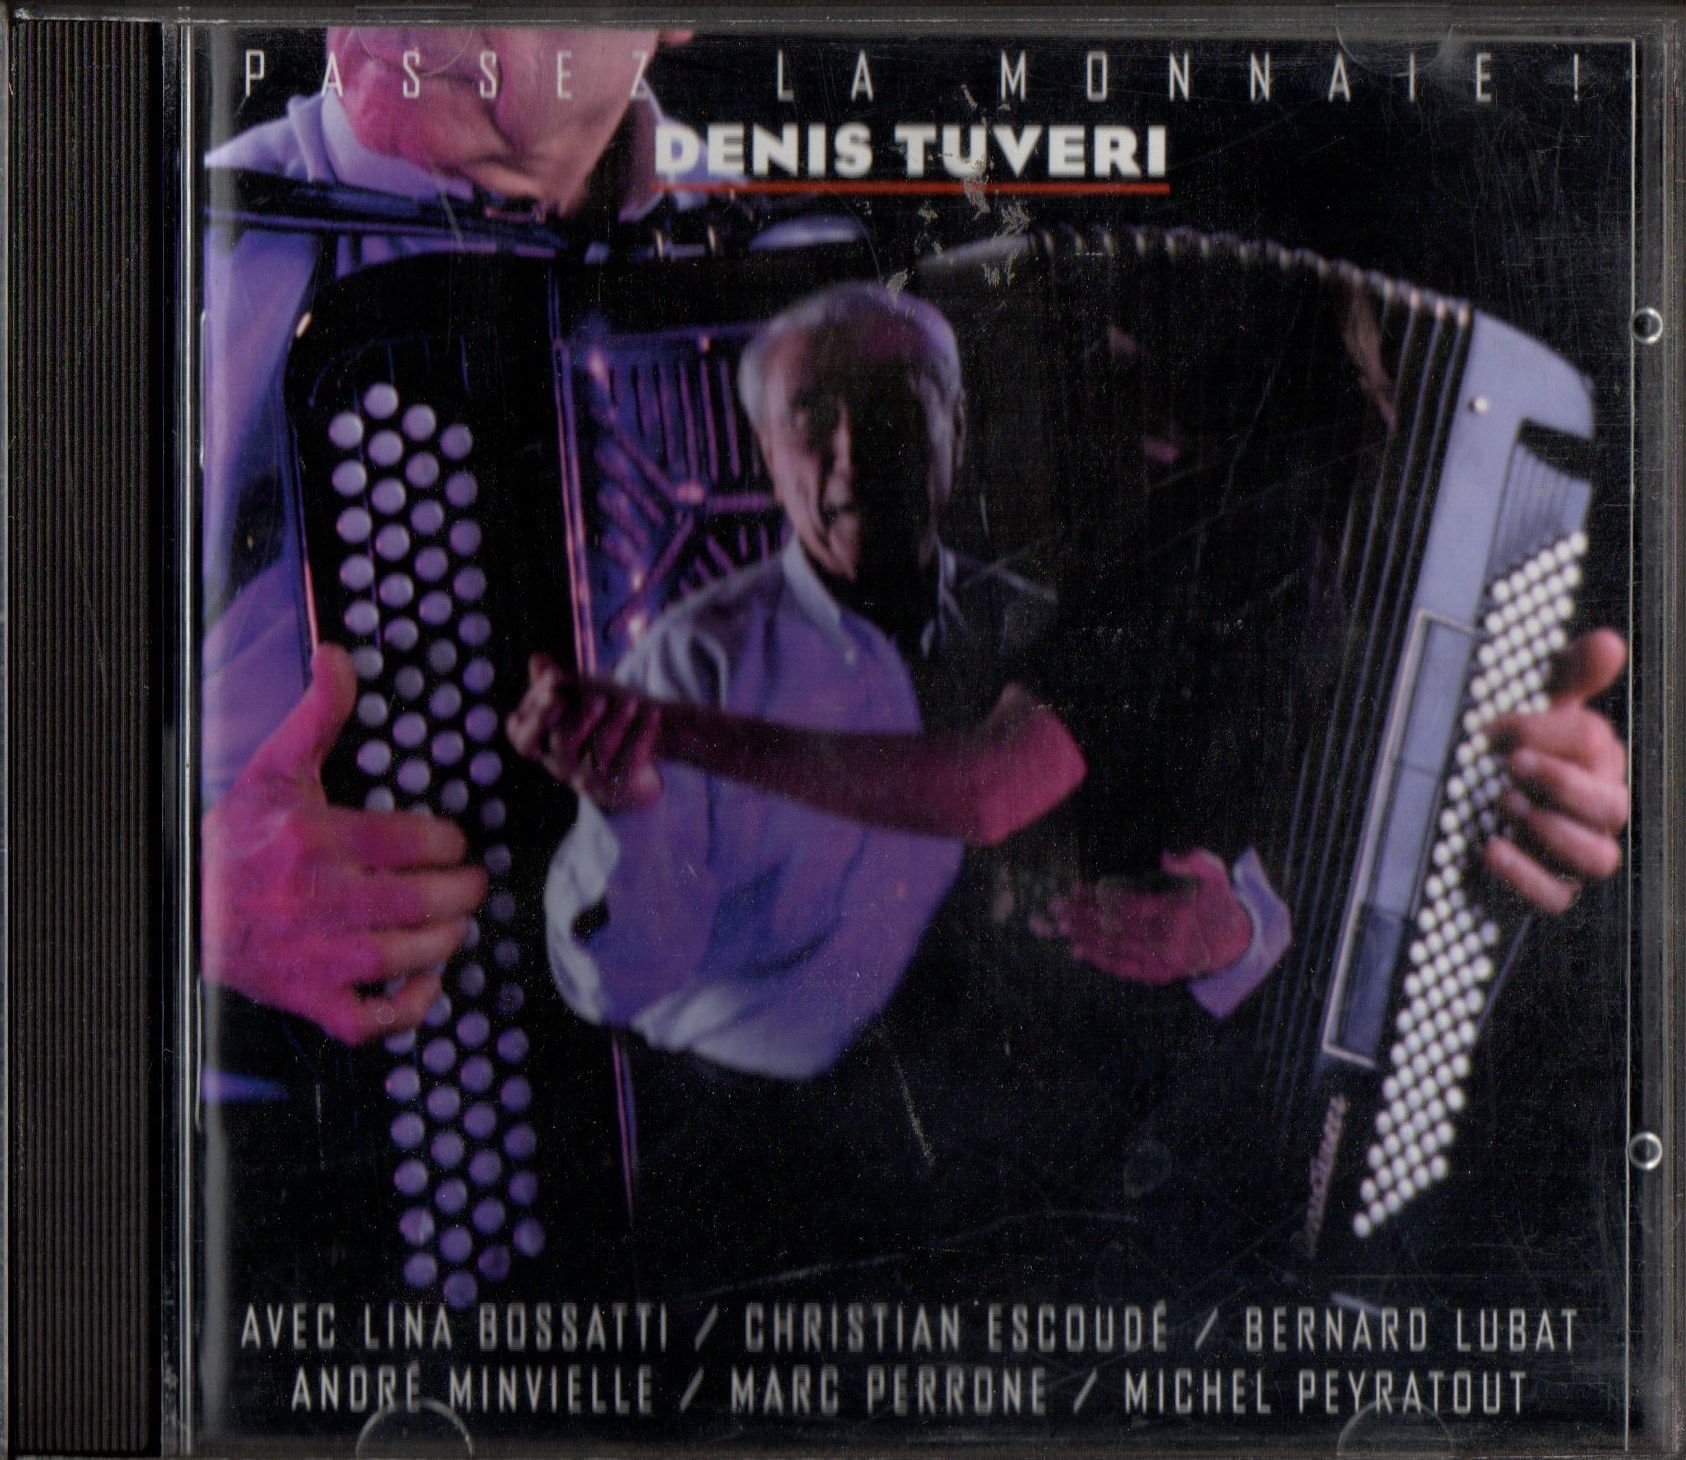 DENIS TUVERI (ACCORDIONIST) – PASSEZ LA MONNAIE! (1997) - CD AKORDİYON TANGO VALS BOLERO 2.EL